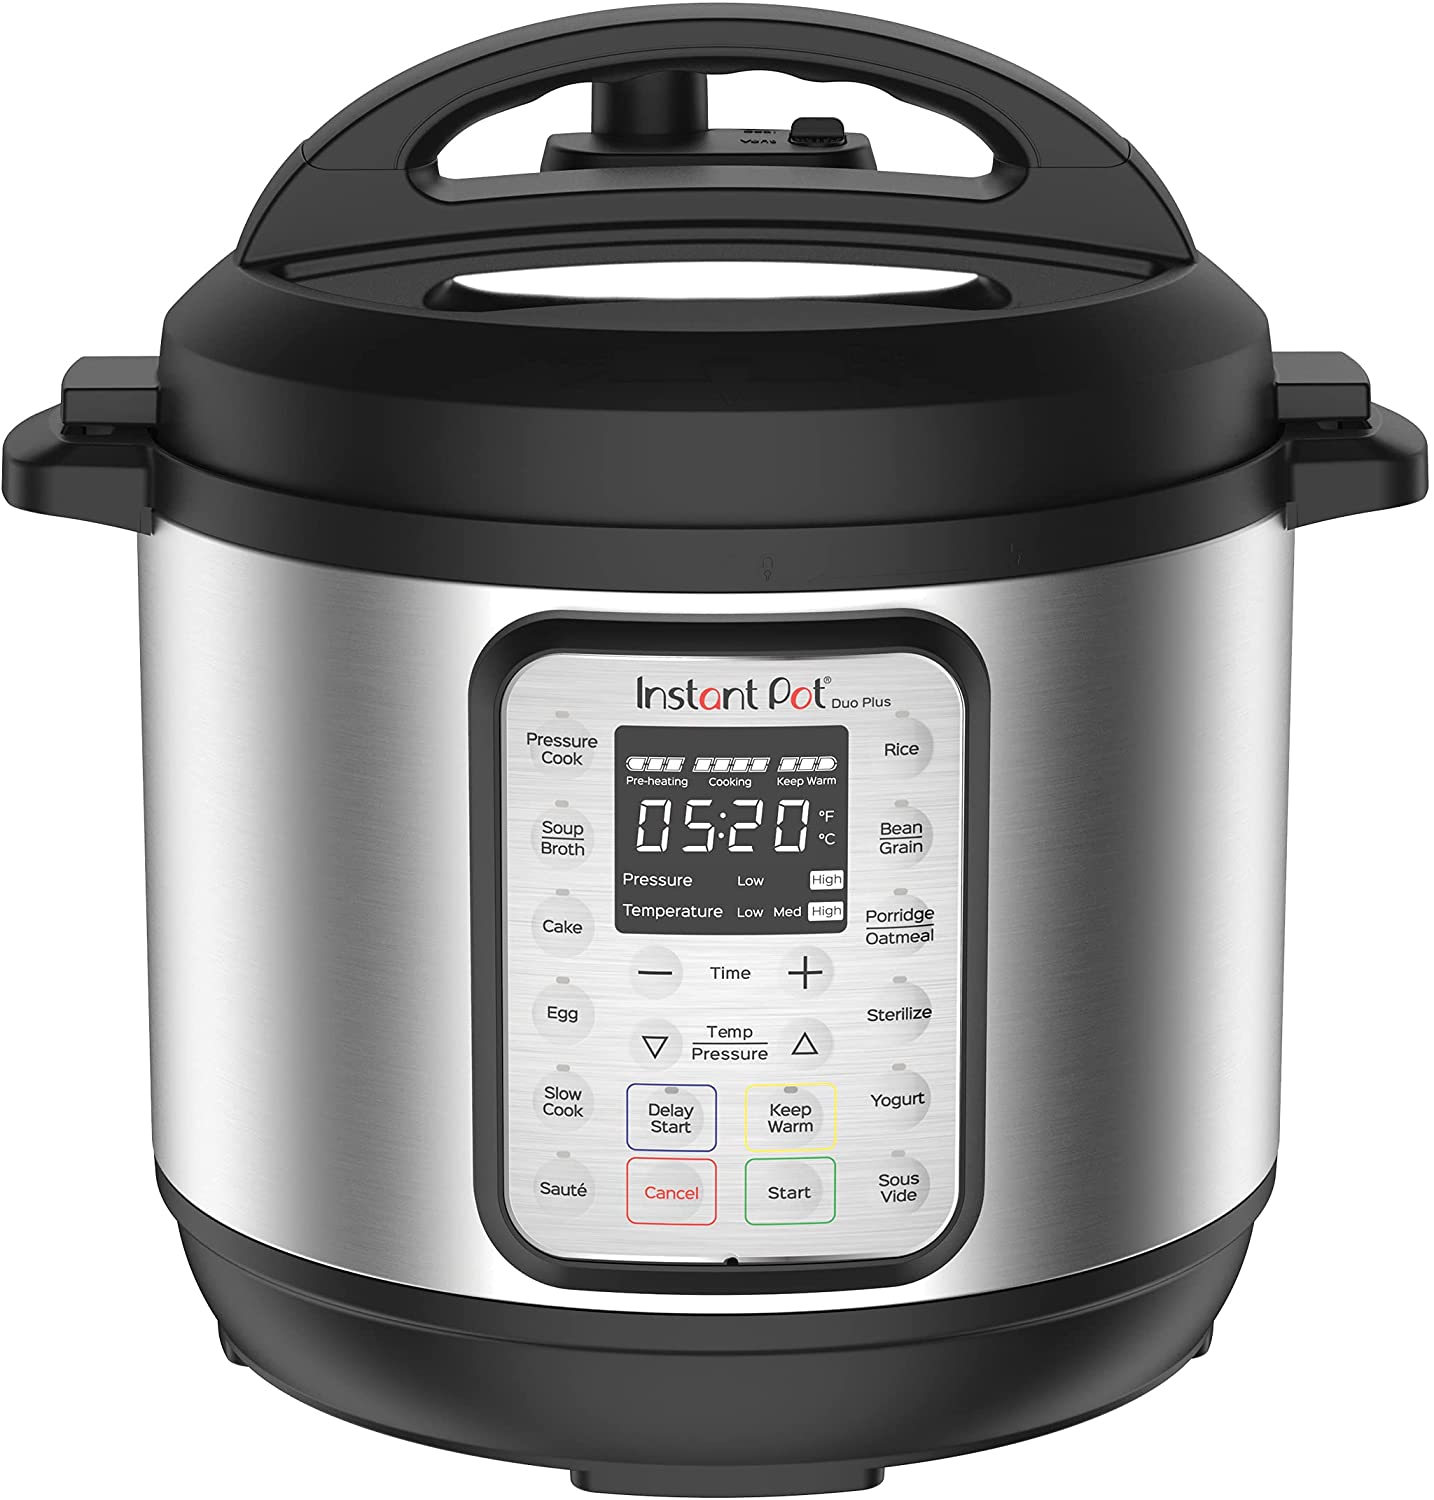 https://www.dontwasteyourmoney.com/wp-content/uploads/2021/12/instant-pot-duo-plus-venting-customizable-slow-cooker.jpg